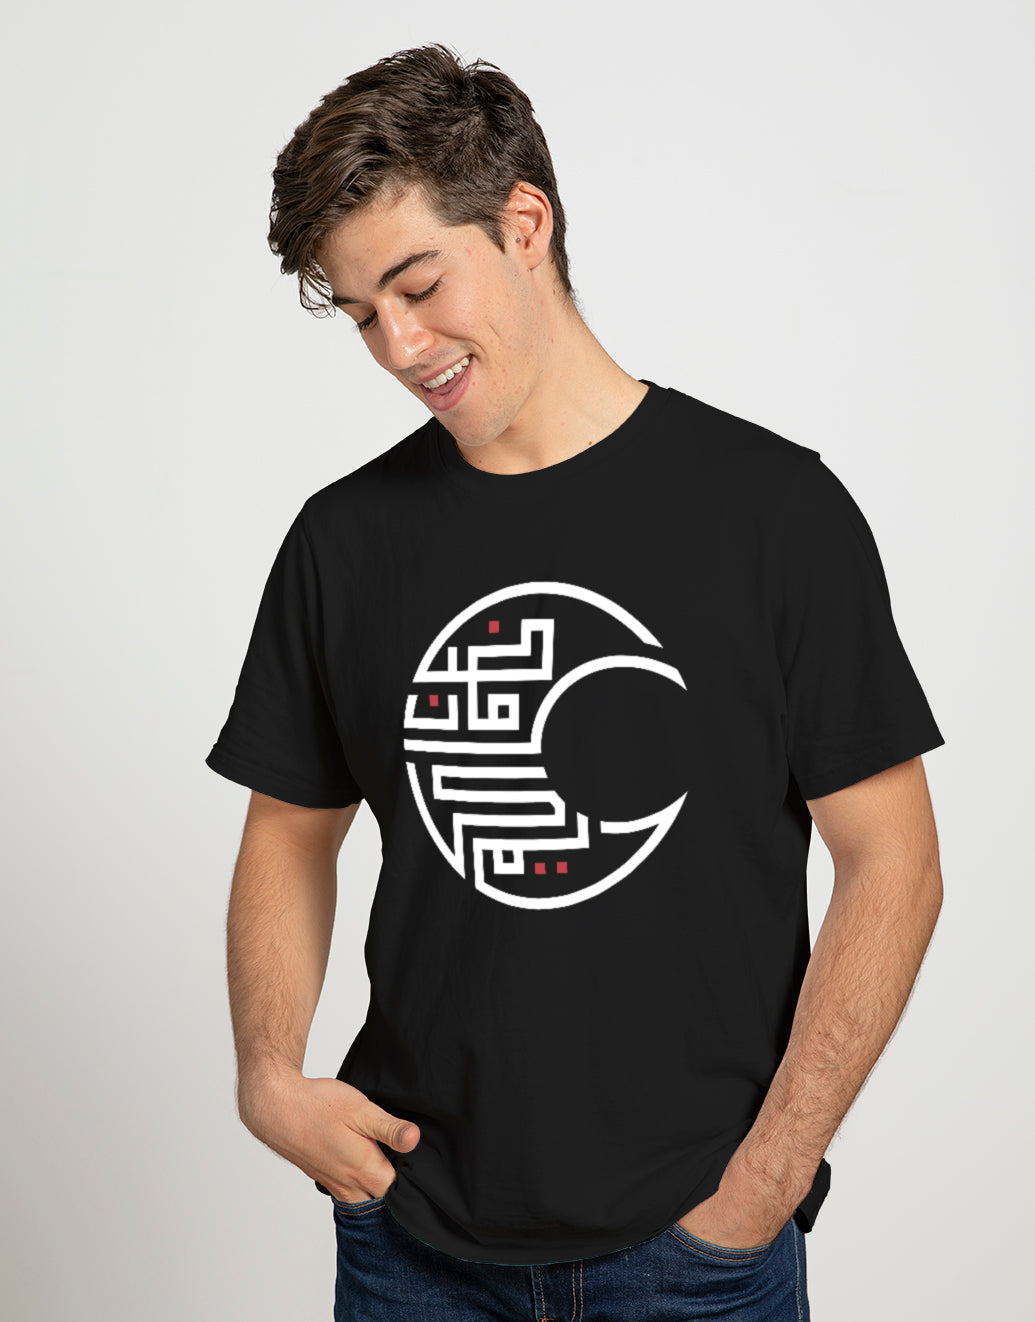 Men's T-shirt (Ramadan Kareem Crescent shape)